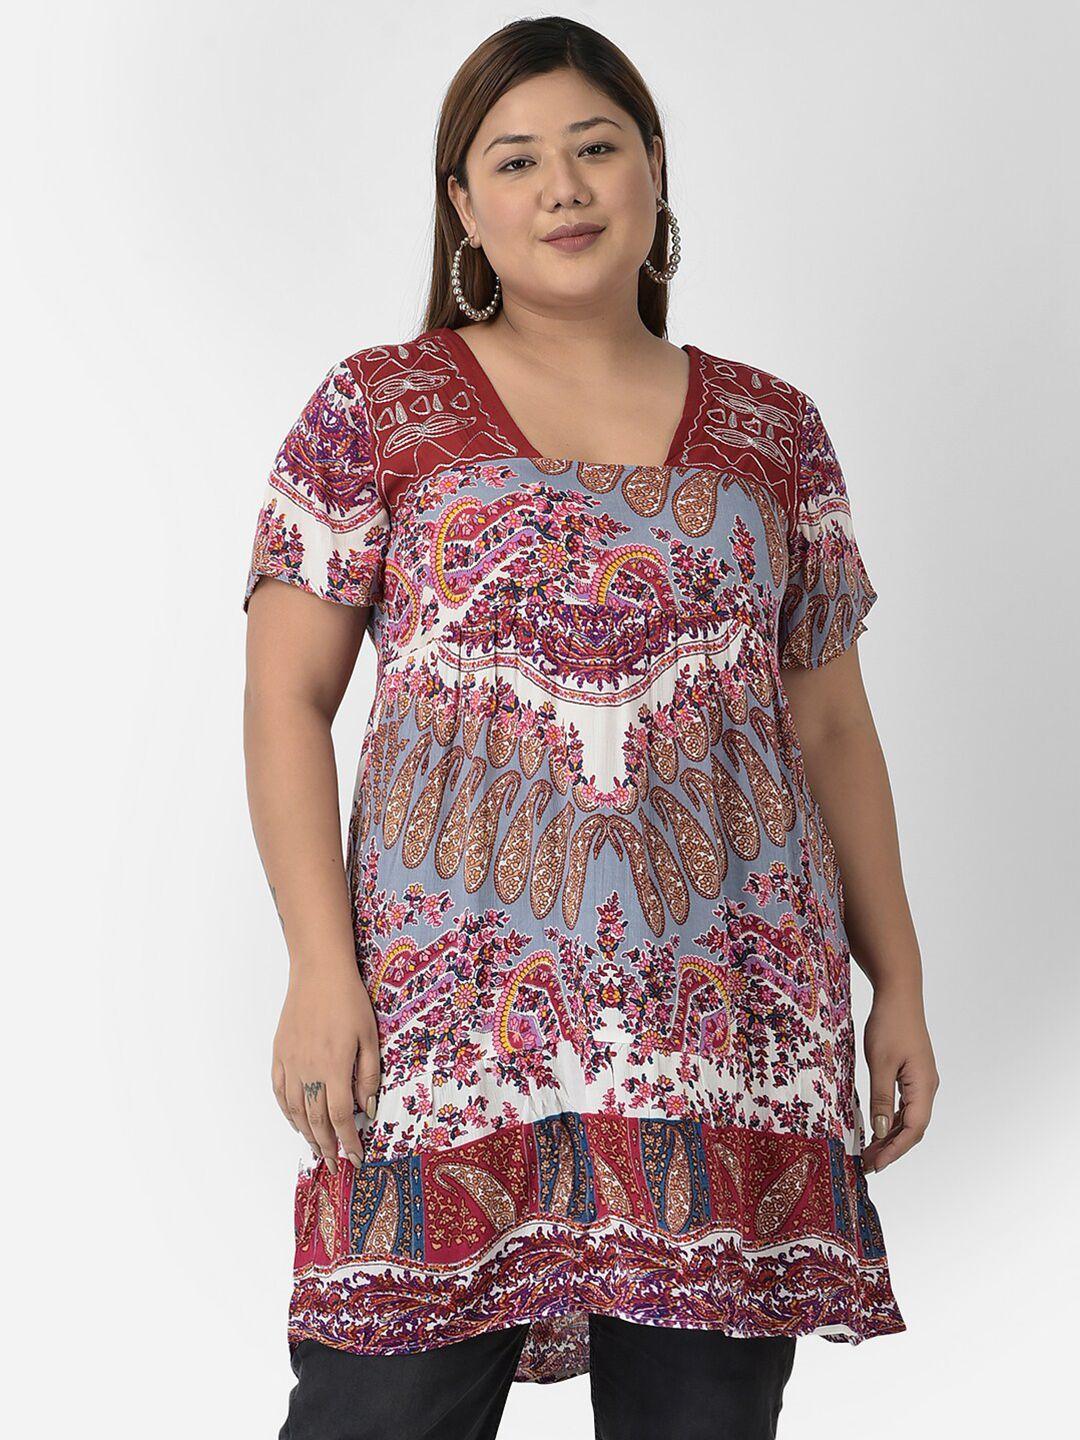 veldress women plus size multicoloured print top